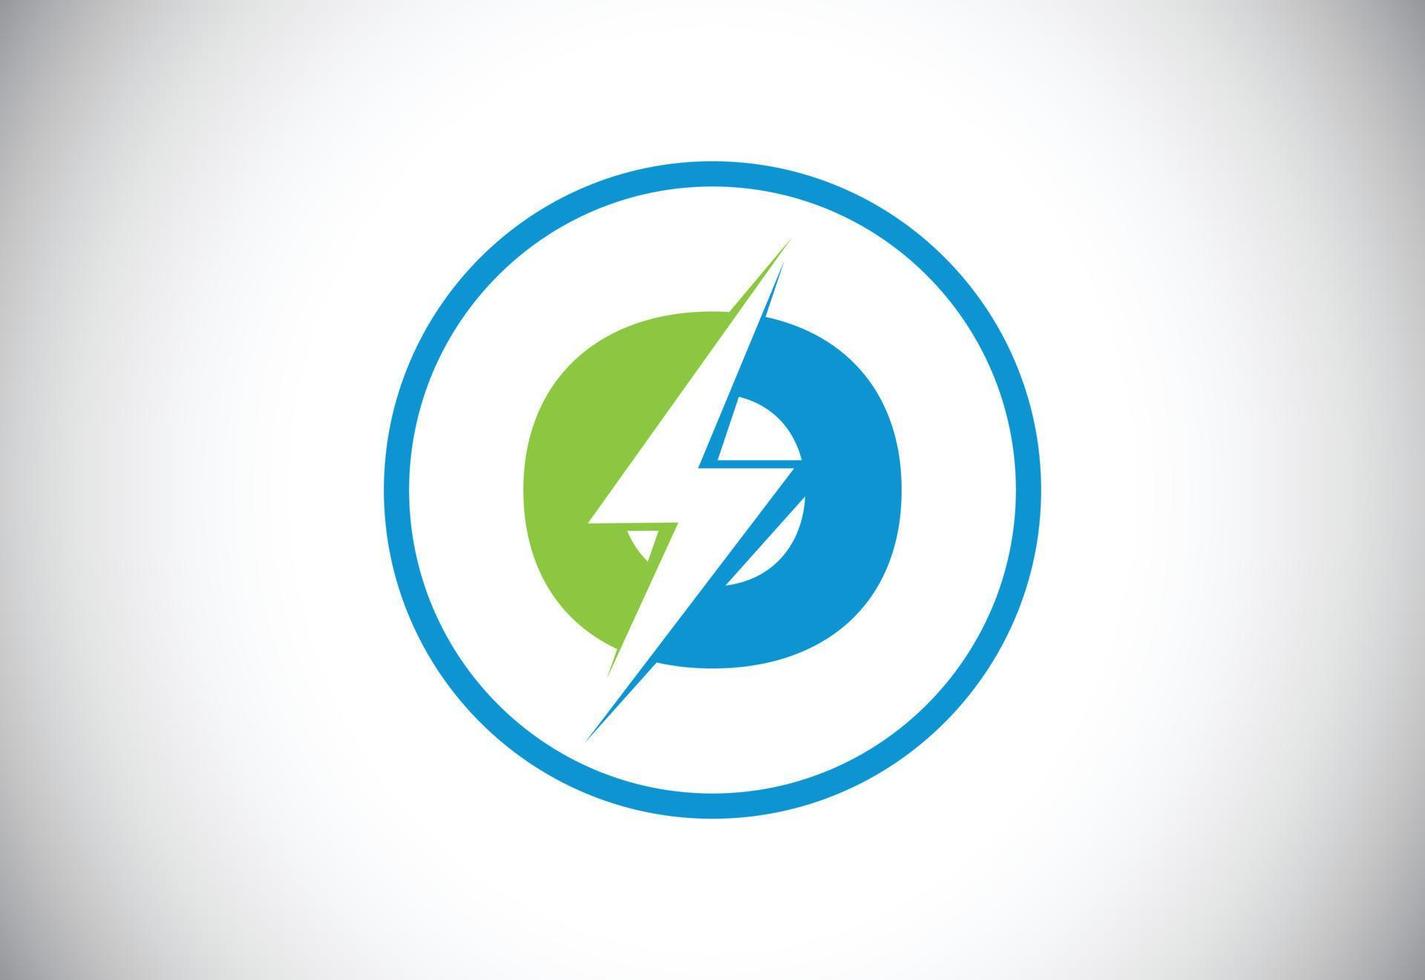 eerste O brief logo ontwerp met verlichting donder bout. elektrisch bout brief logo vector